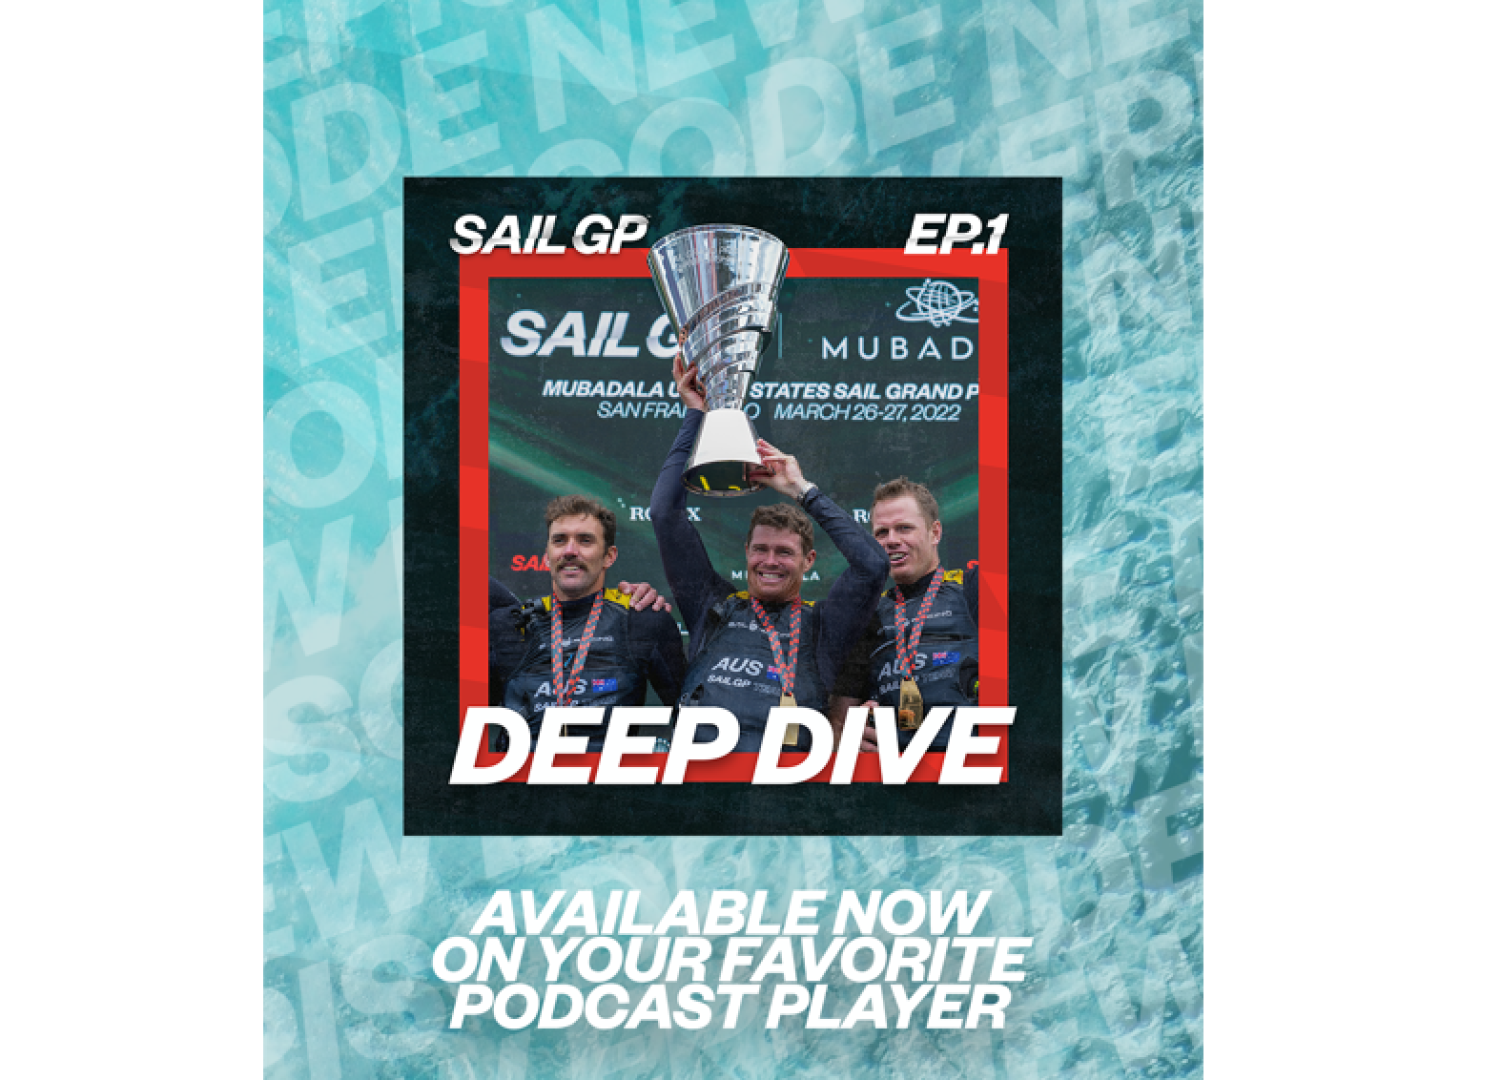 SailGP launches Deep Dive podcast for Season 3